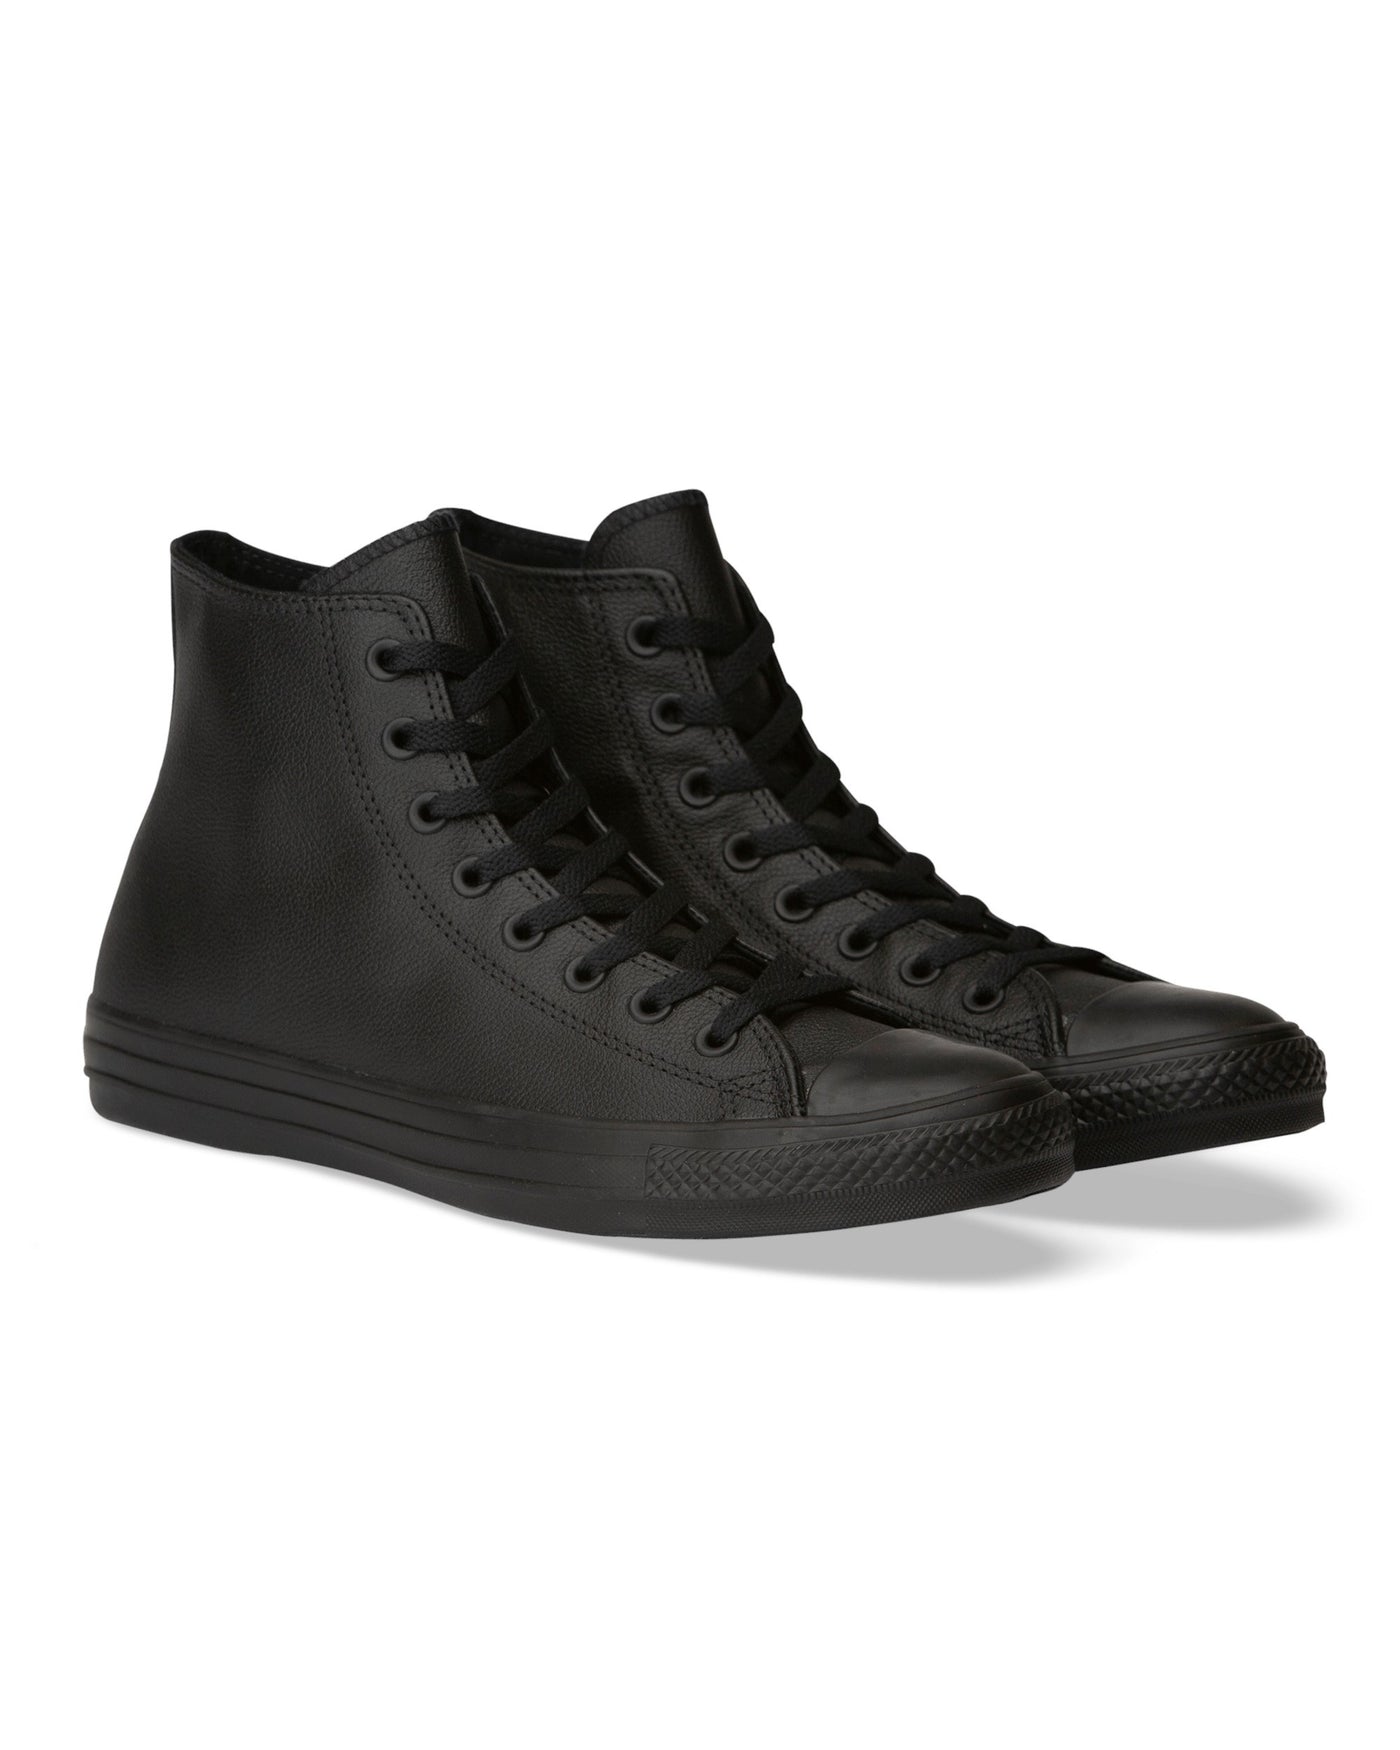 Converse Chuck Taylor Leather High Top Black/Black